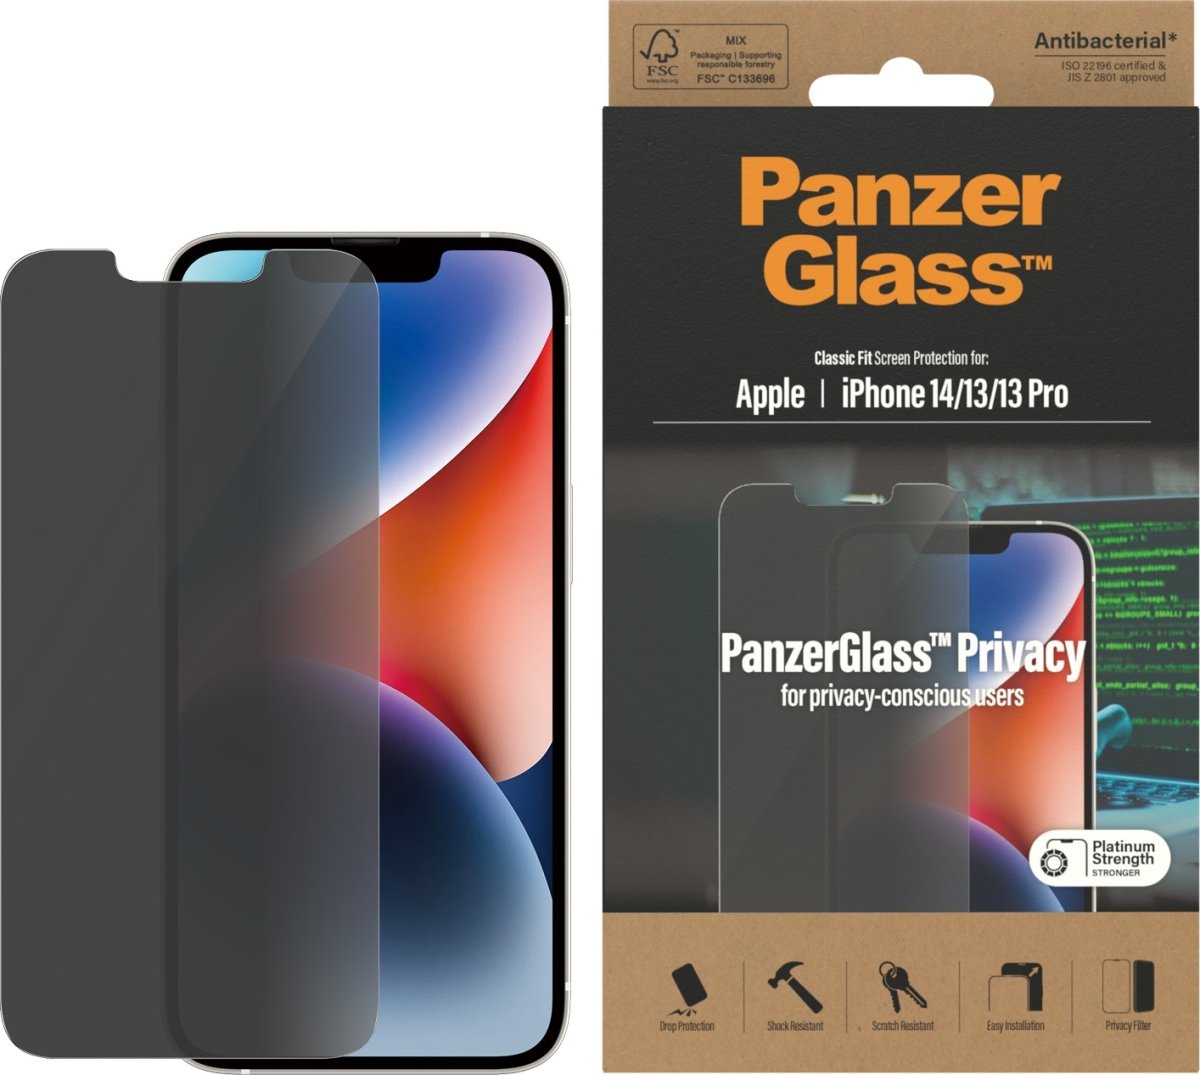 PanzerGlass Apple iPhone 14/13/13 Pro Privacy